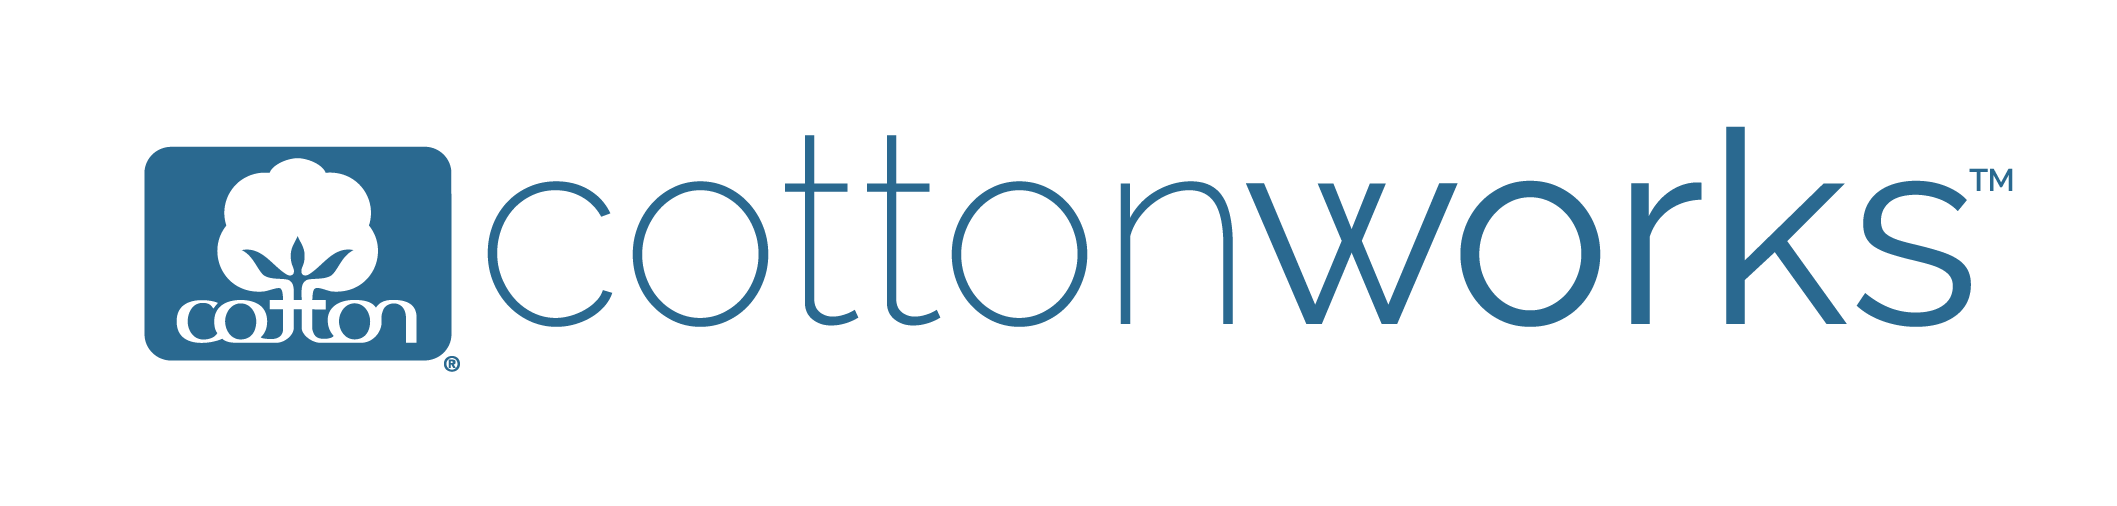 cotton works logo